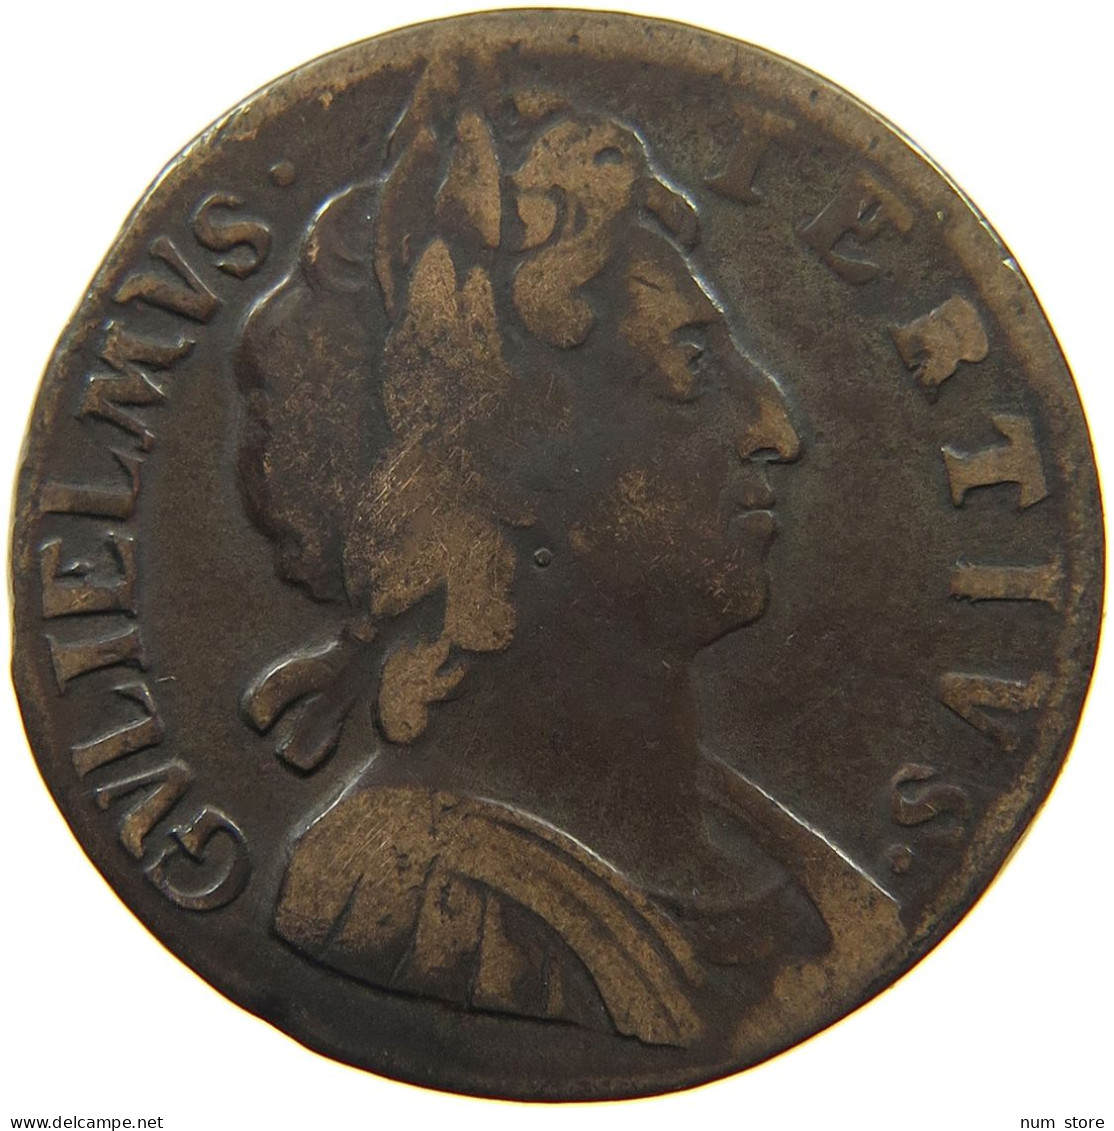 GREAT BRITAIN HALFPENNY 1699 WILLIAM III. (1694-1702) #t073 0007 - B. 1/2 Penny